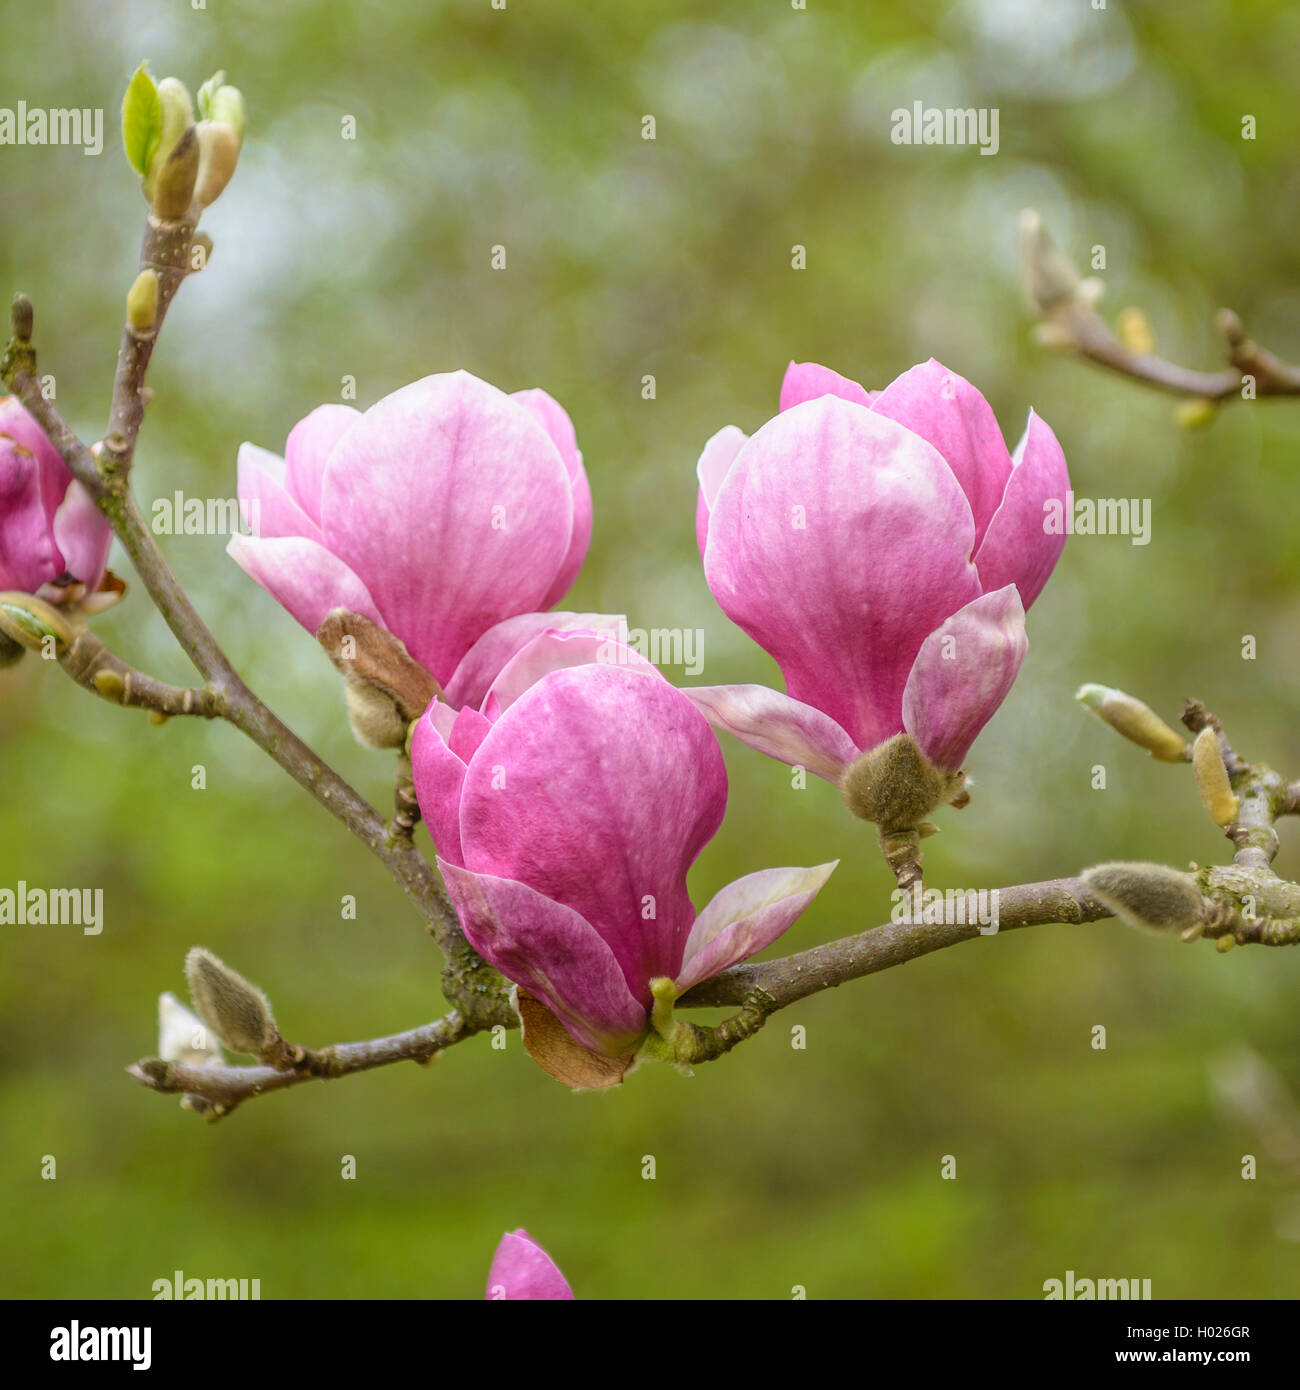 magnolia (Magnolia 'Rustica Rubra', Magnolia Rustica Rubra), cultivar Rustica Rubra Stock Photo